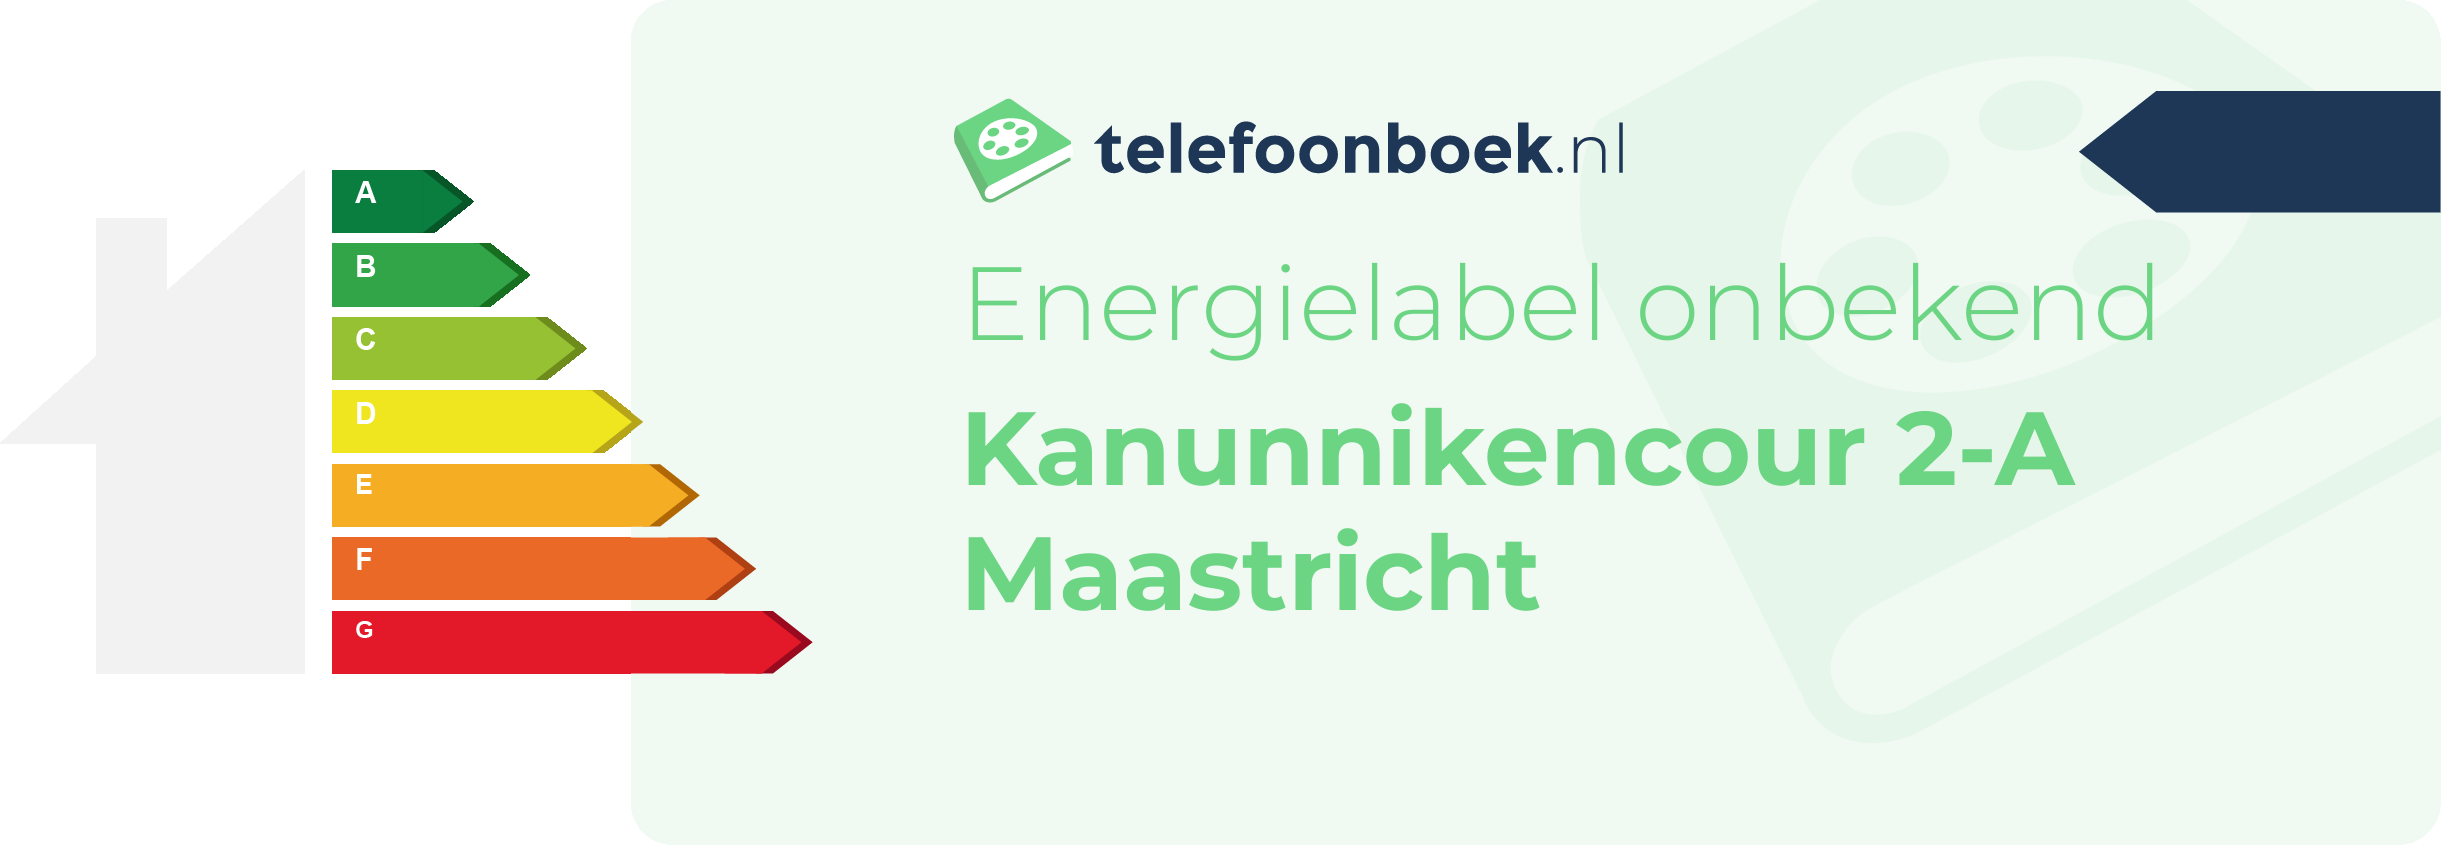 Energielabel Kanunnikencour 2-A Maastricht